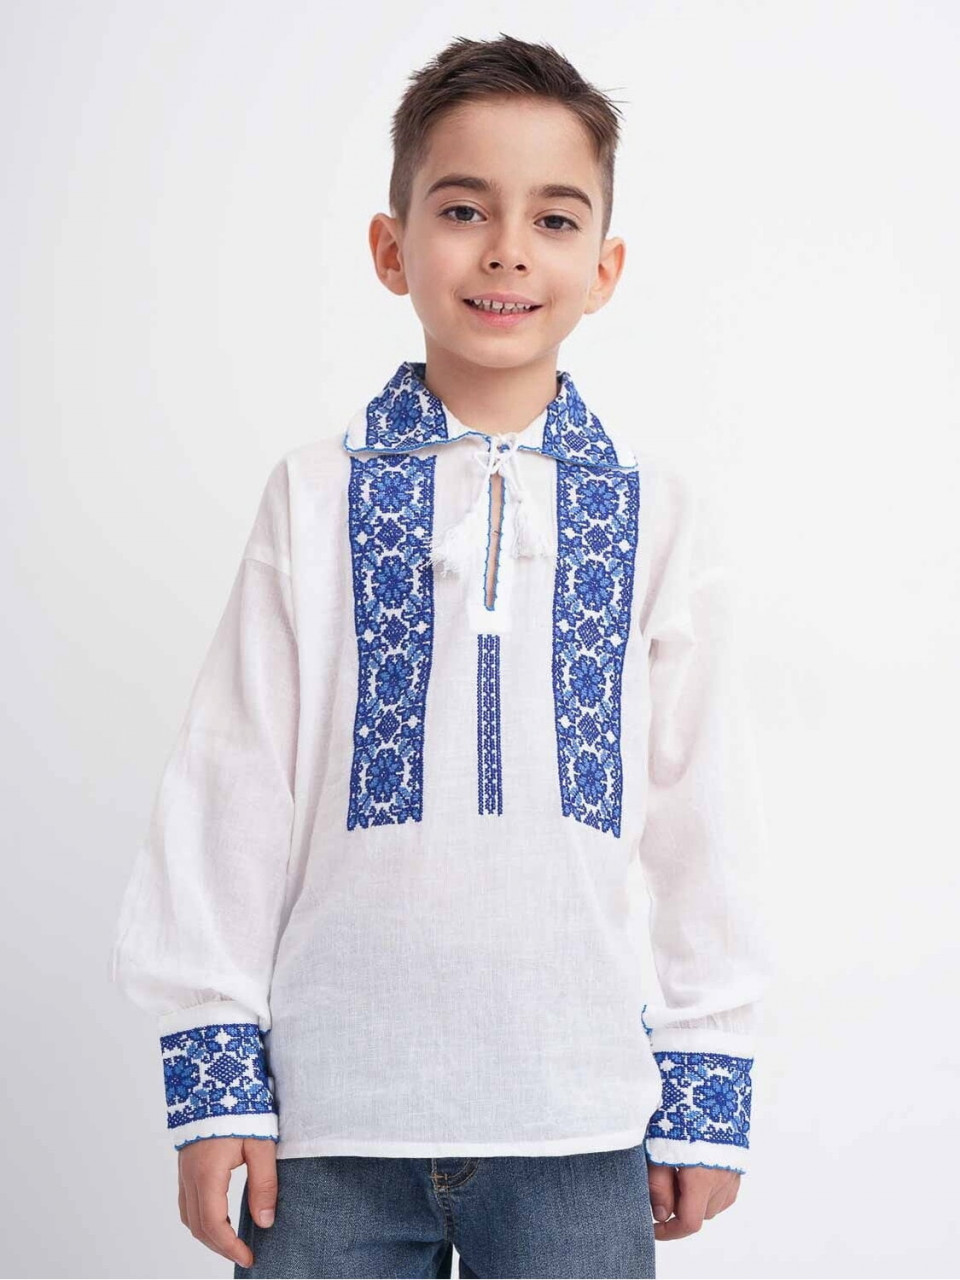 Bluza Traditionala pentru Baieti din Bumbac Alb cu Broderie Florala Albastra